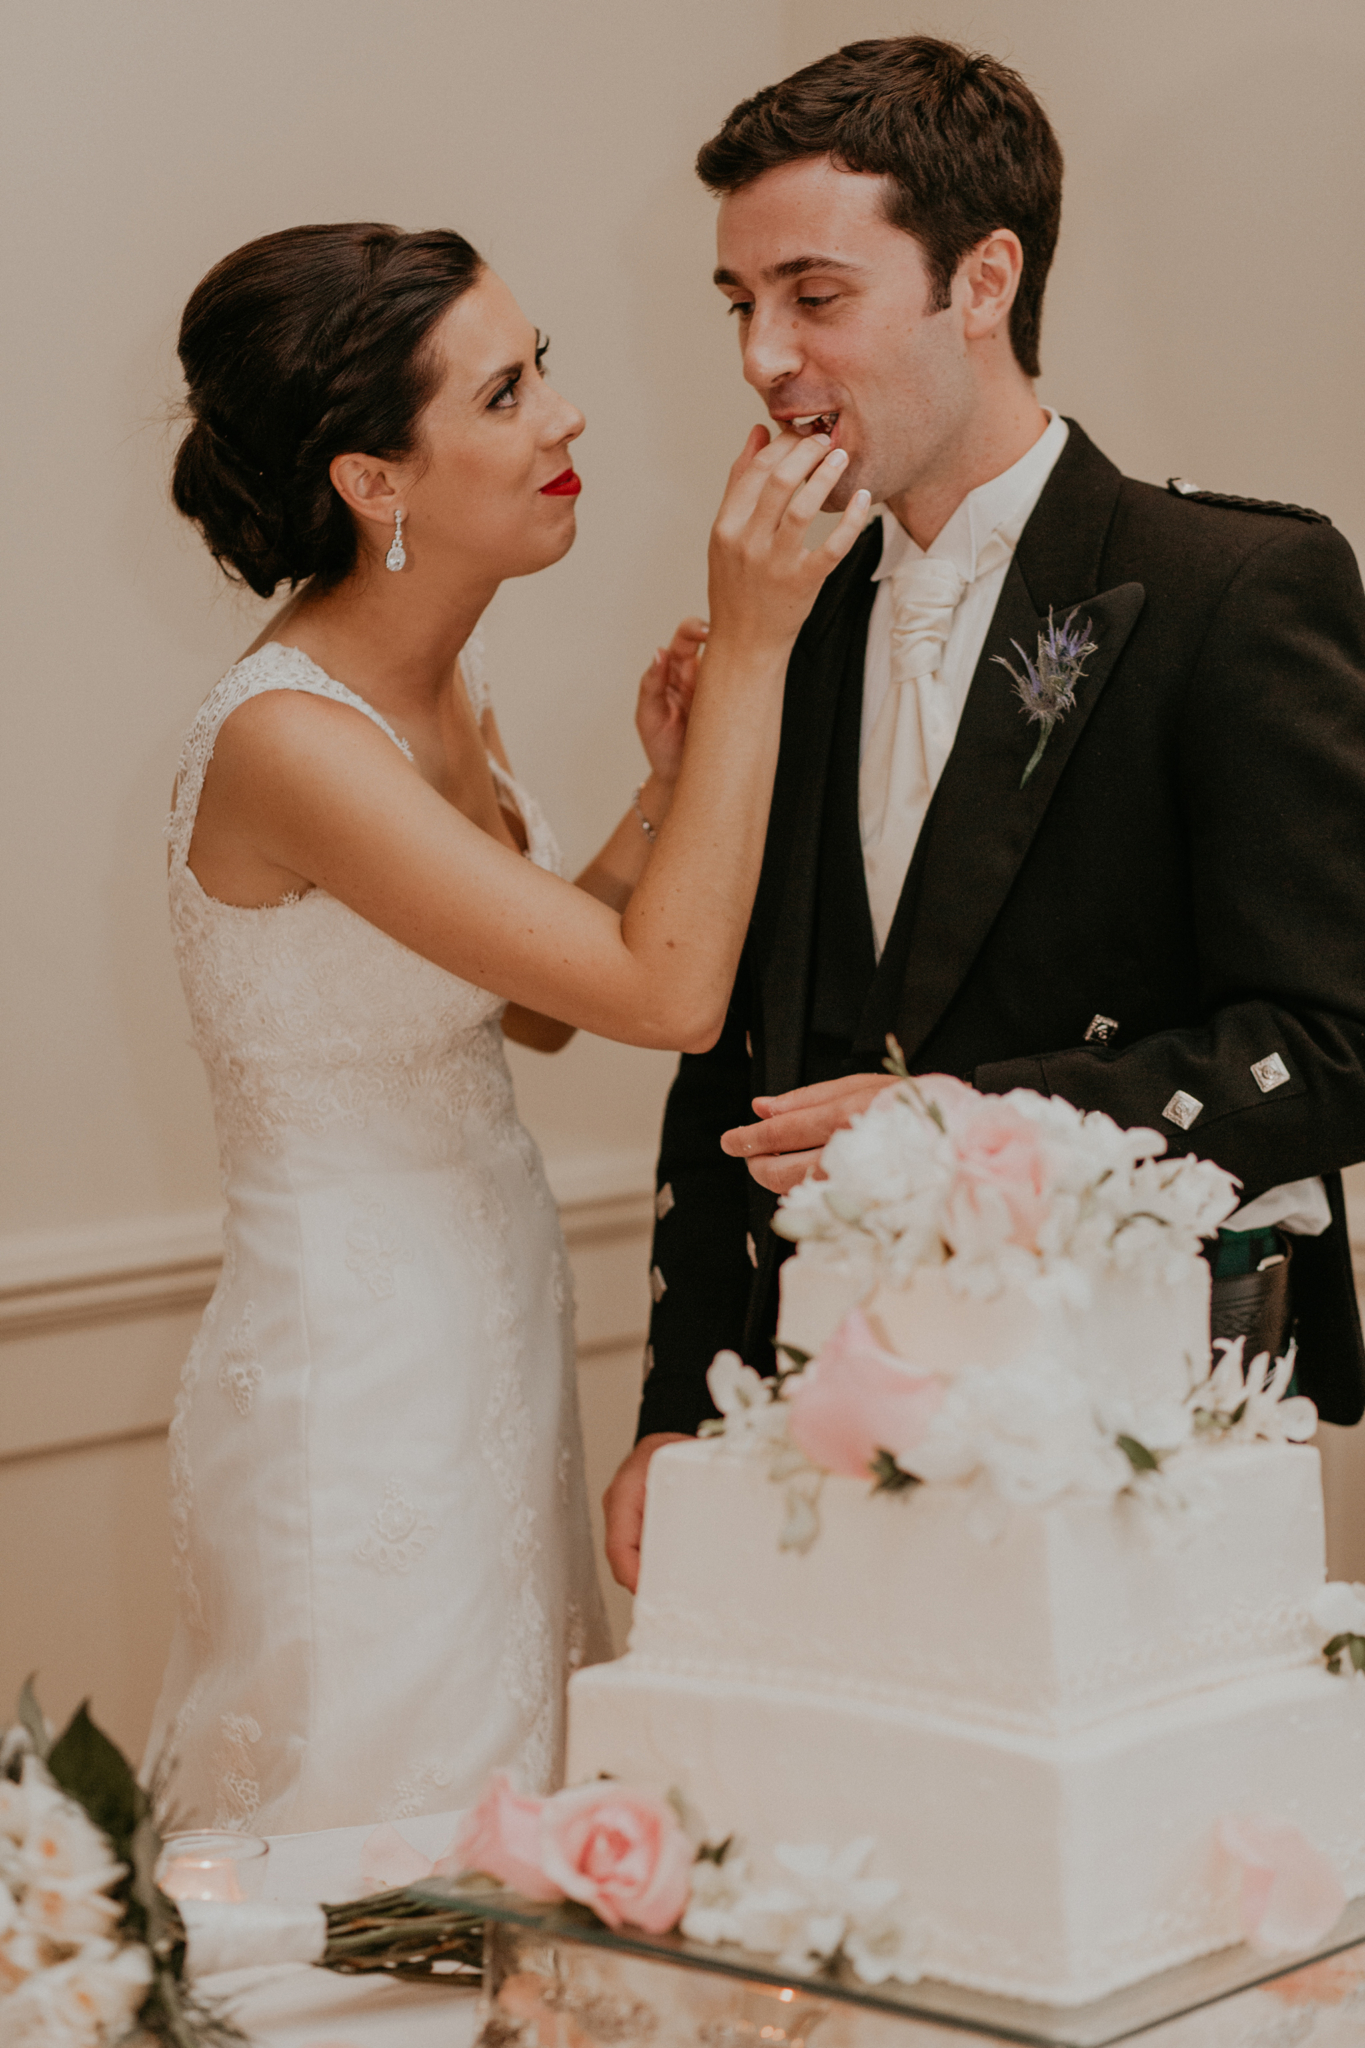 Bride feeds groom cake at wedding